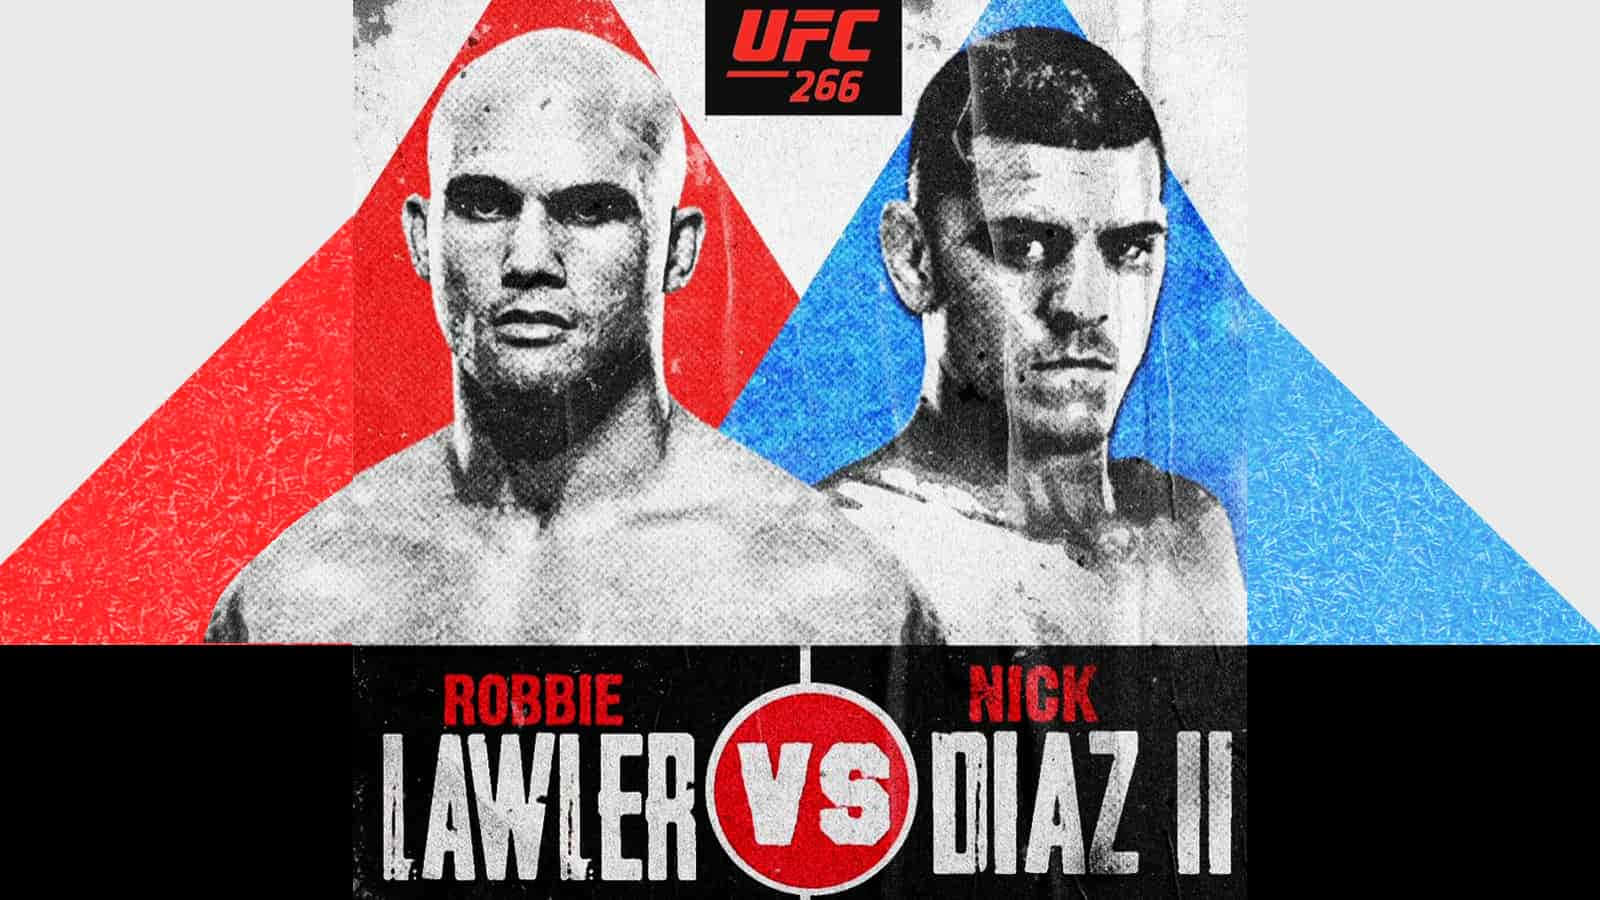 Nick Diaz in an intense bout against Robbie Lawler. Wallpaper